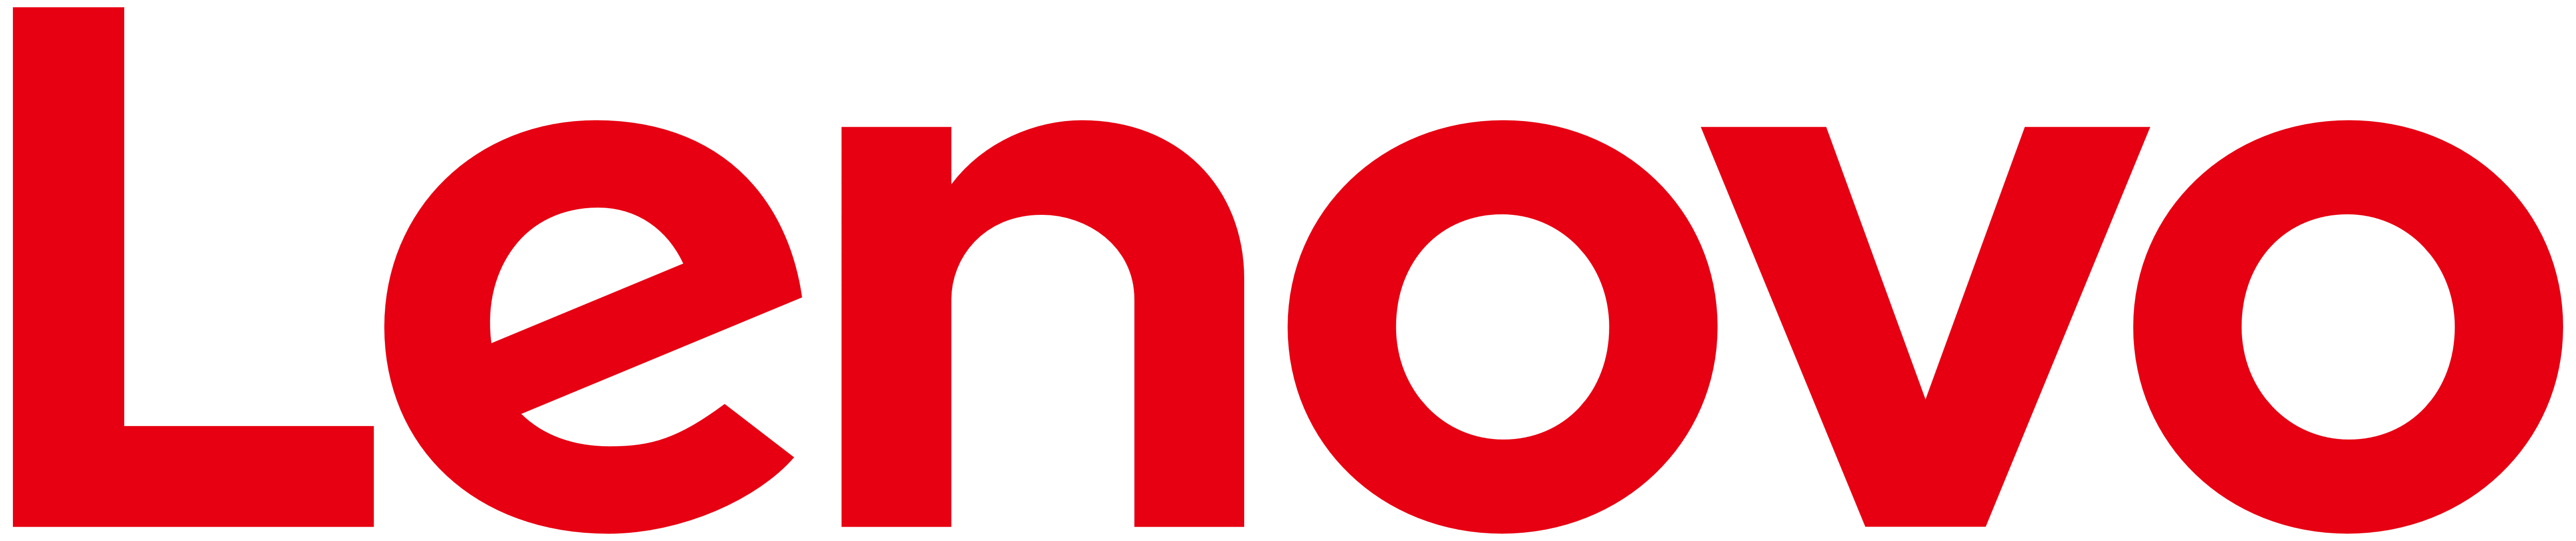 Lenovo Logo Png Download - 91